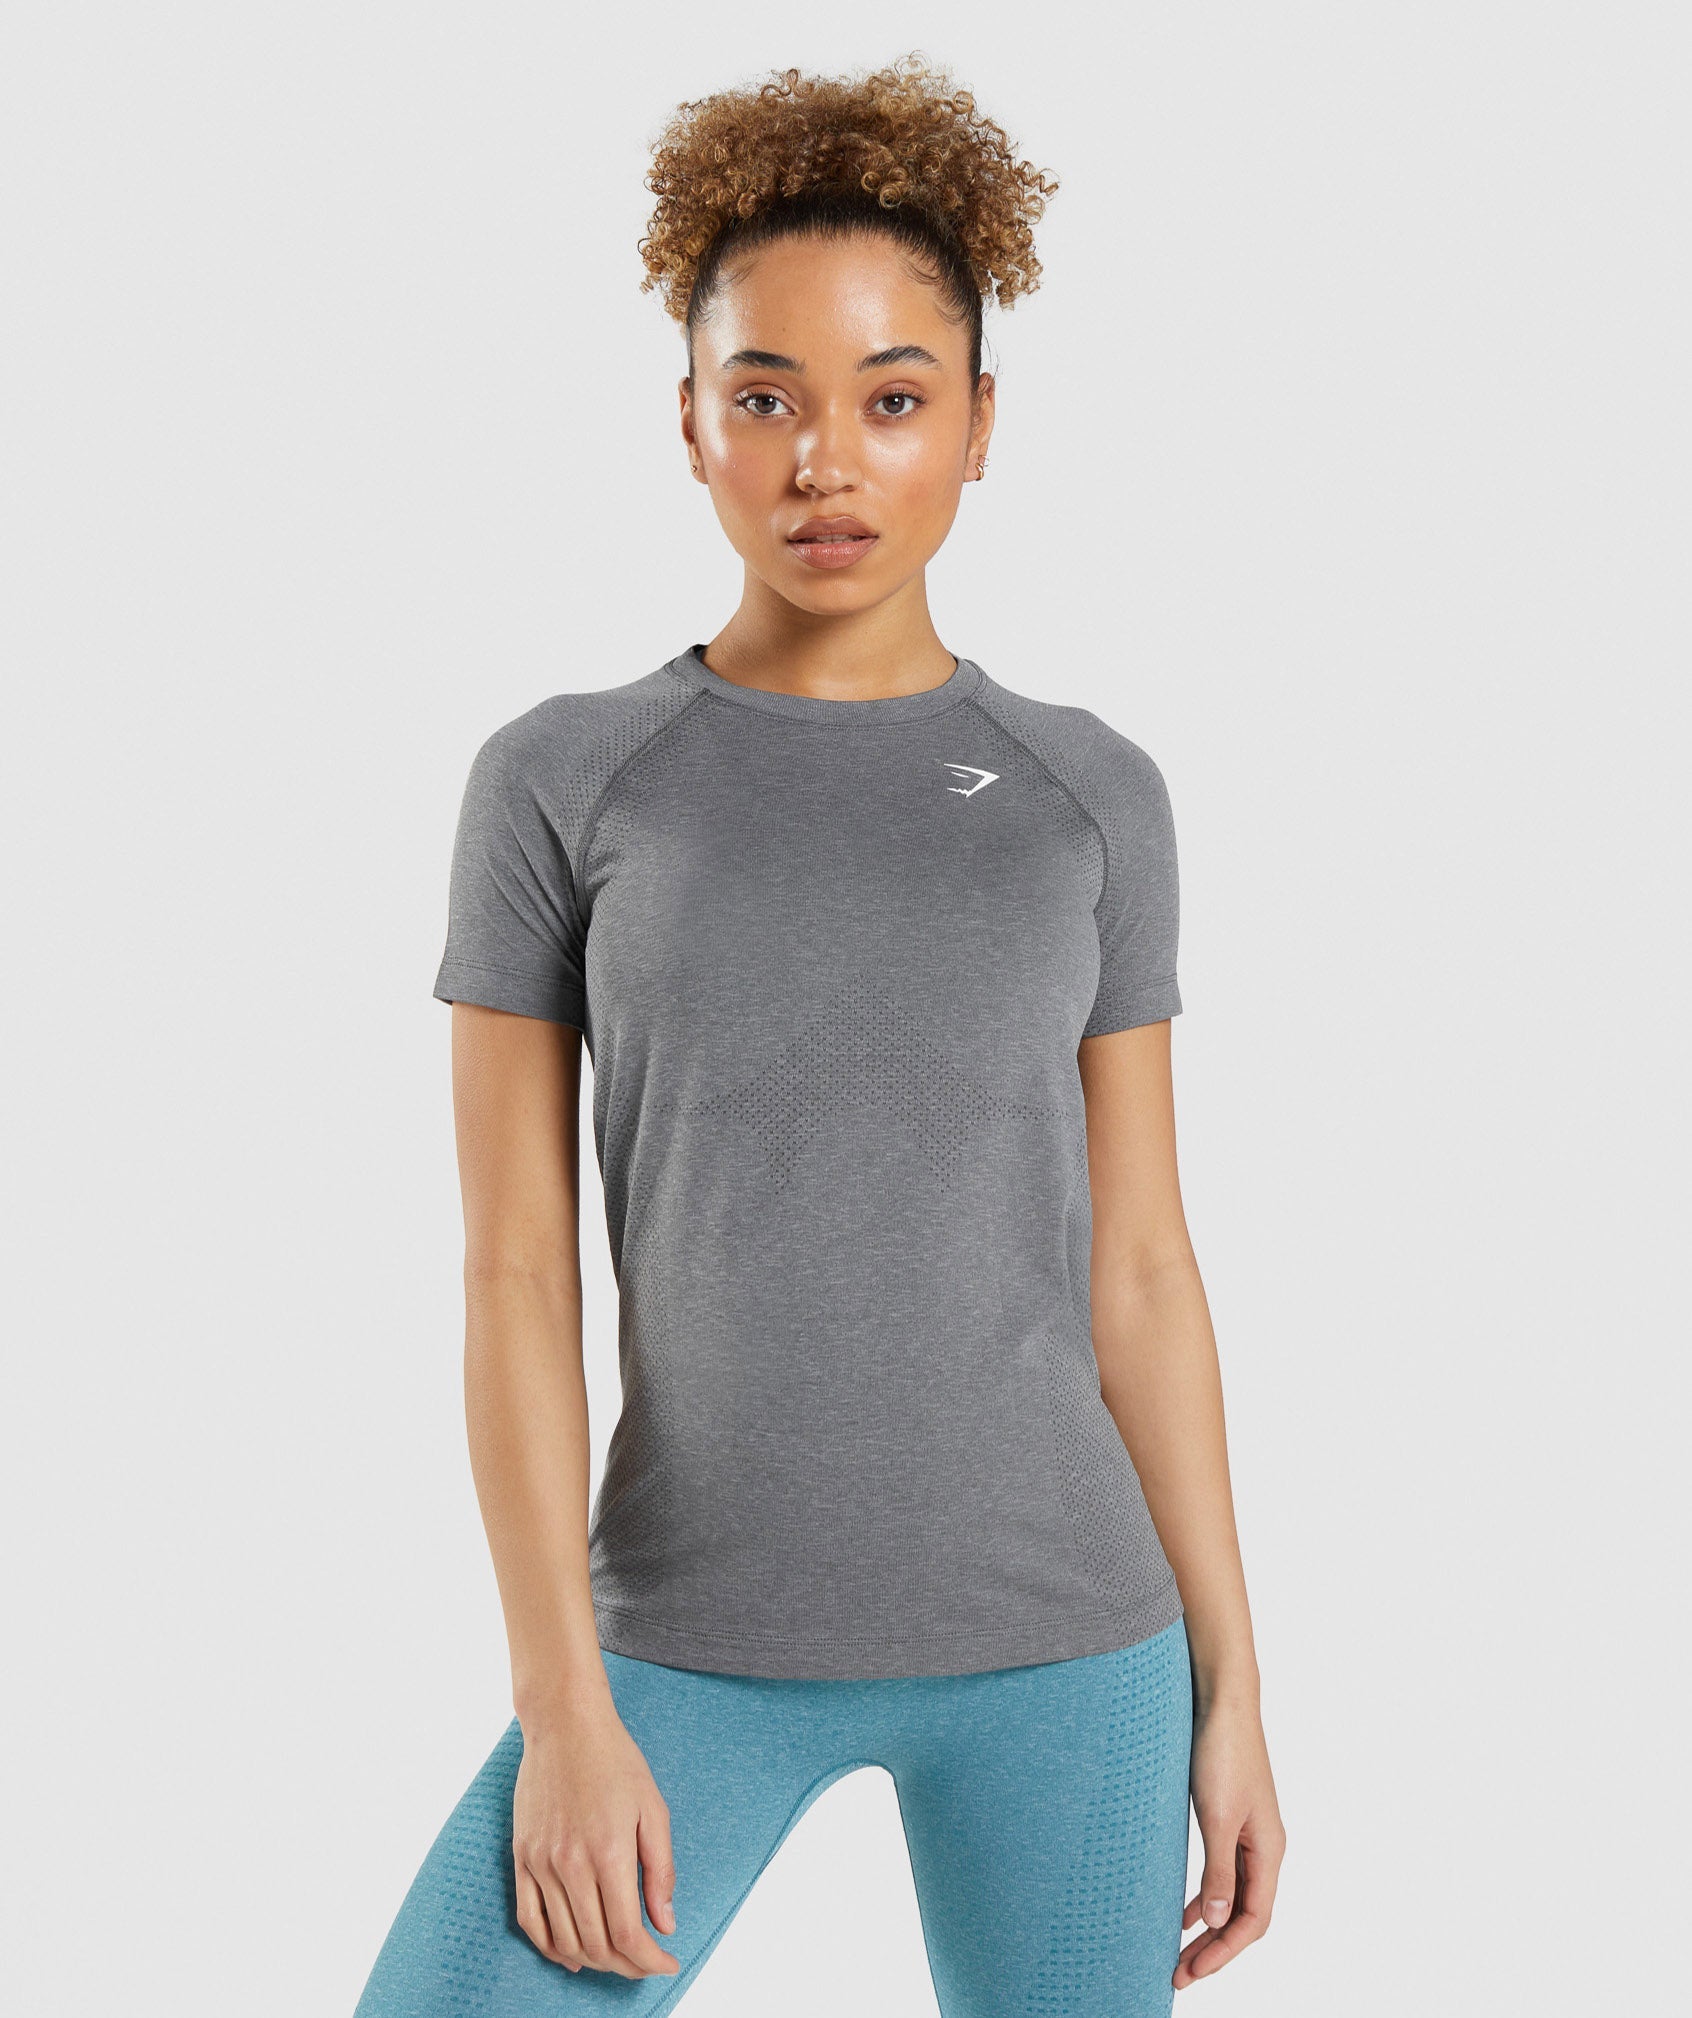 Women's Gymshark Running Top SS dark/grey training t-shirt 